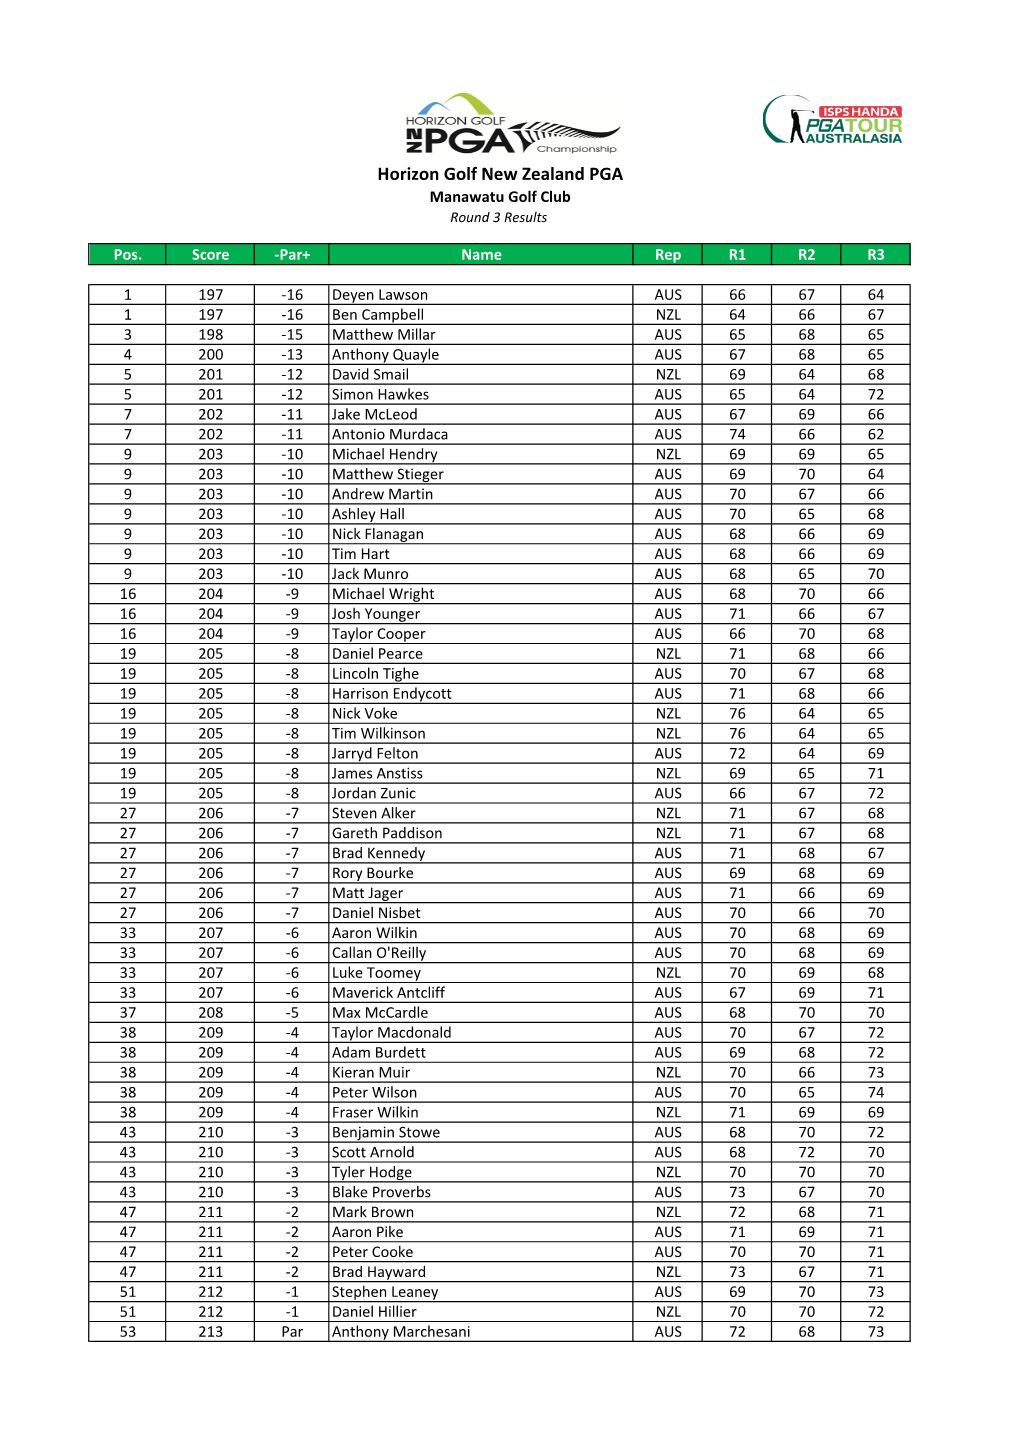 Horizon Golf New Zealand PGA Manawatu Golf Club Round 3 Results